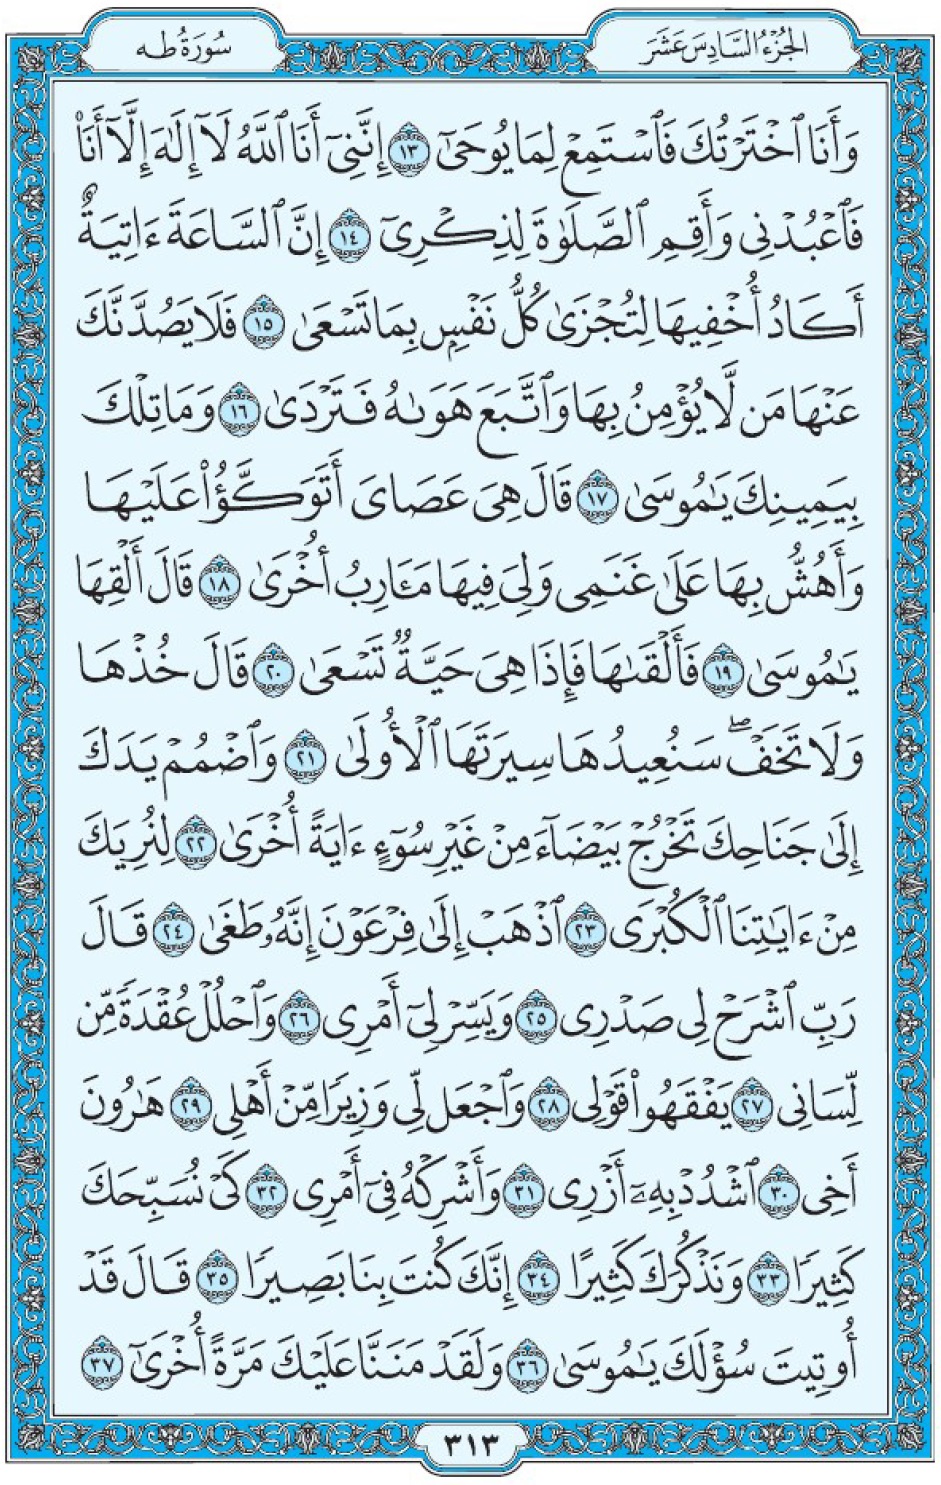 Коран Мединский мусхаф страница 313, Та Ха, аят 13-37